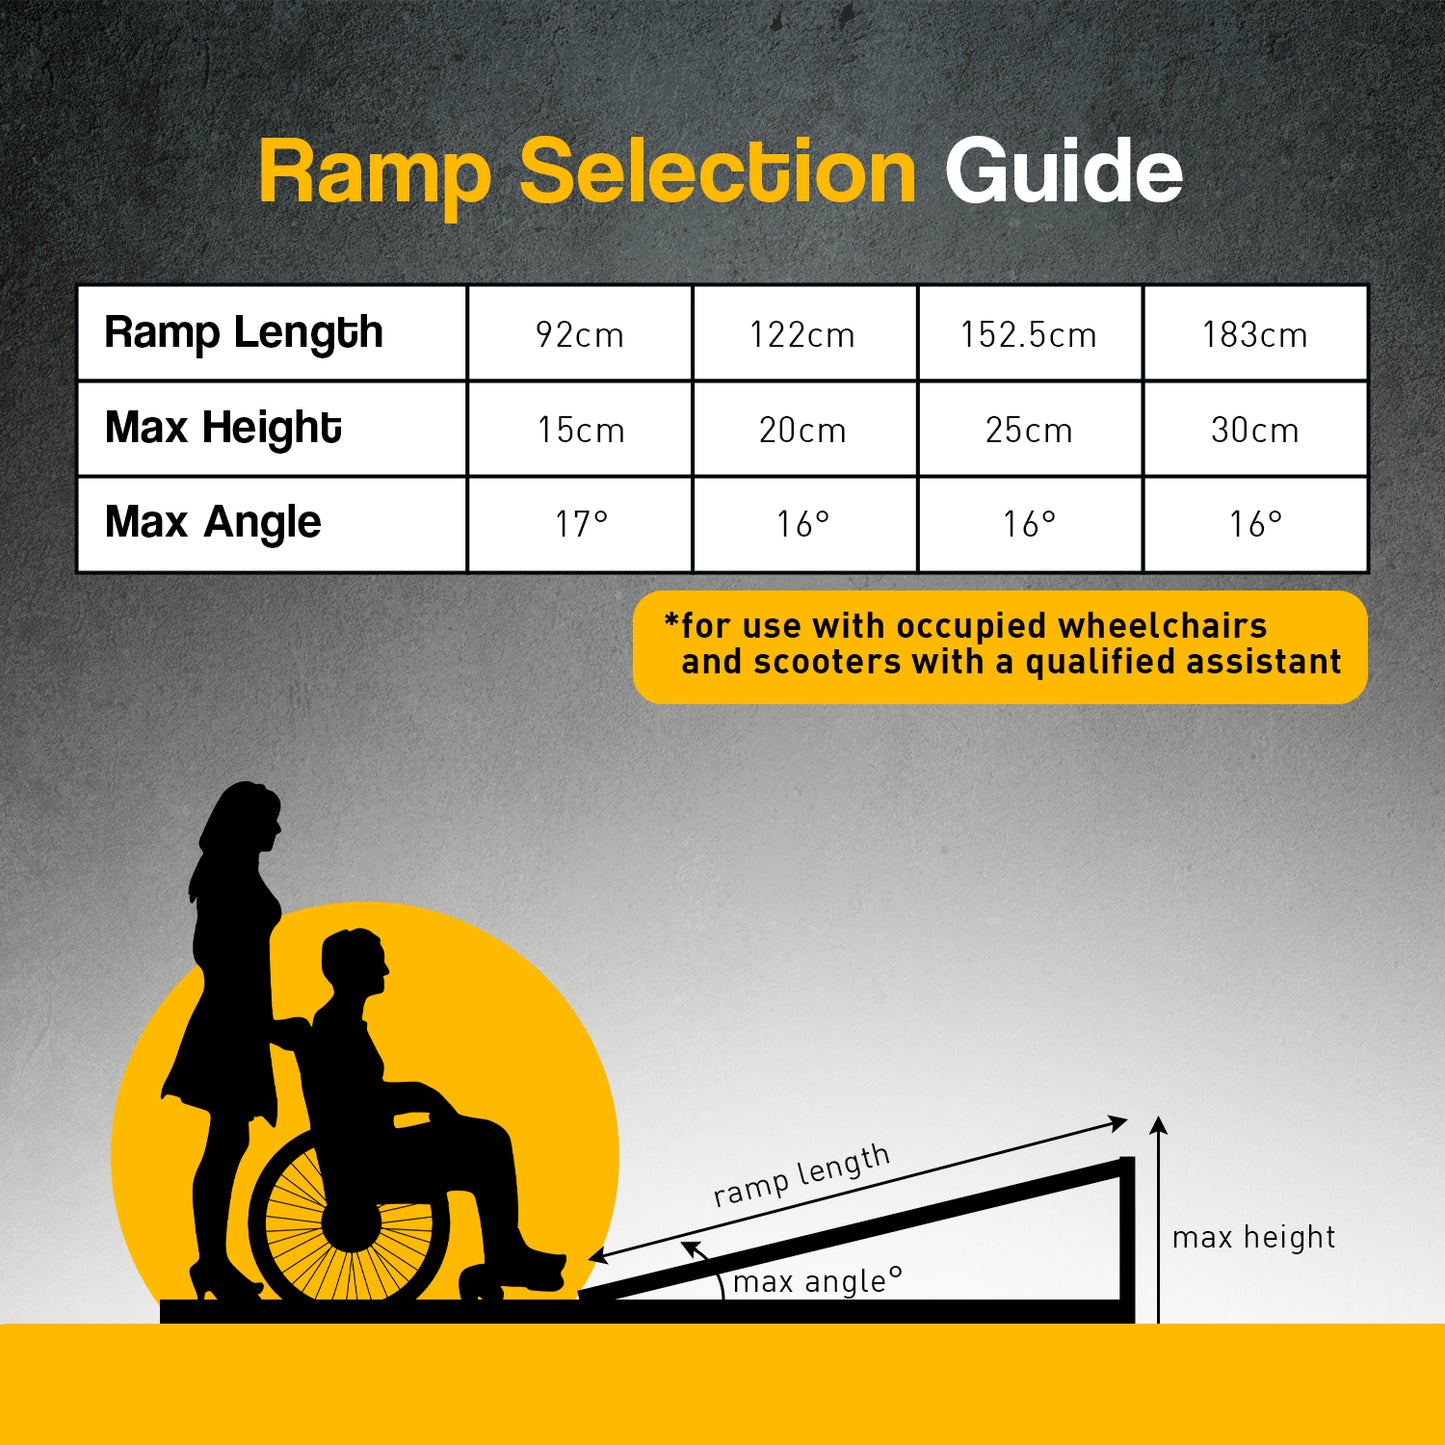 Aluminium Foldable Wheelchair Ramp R01 - 5ft